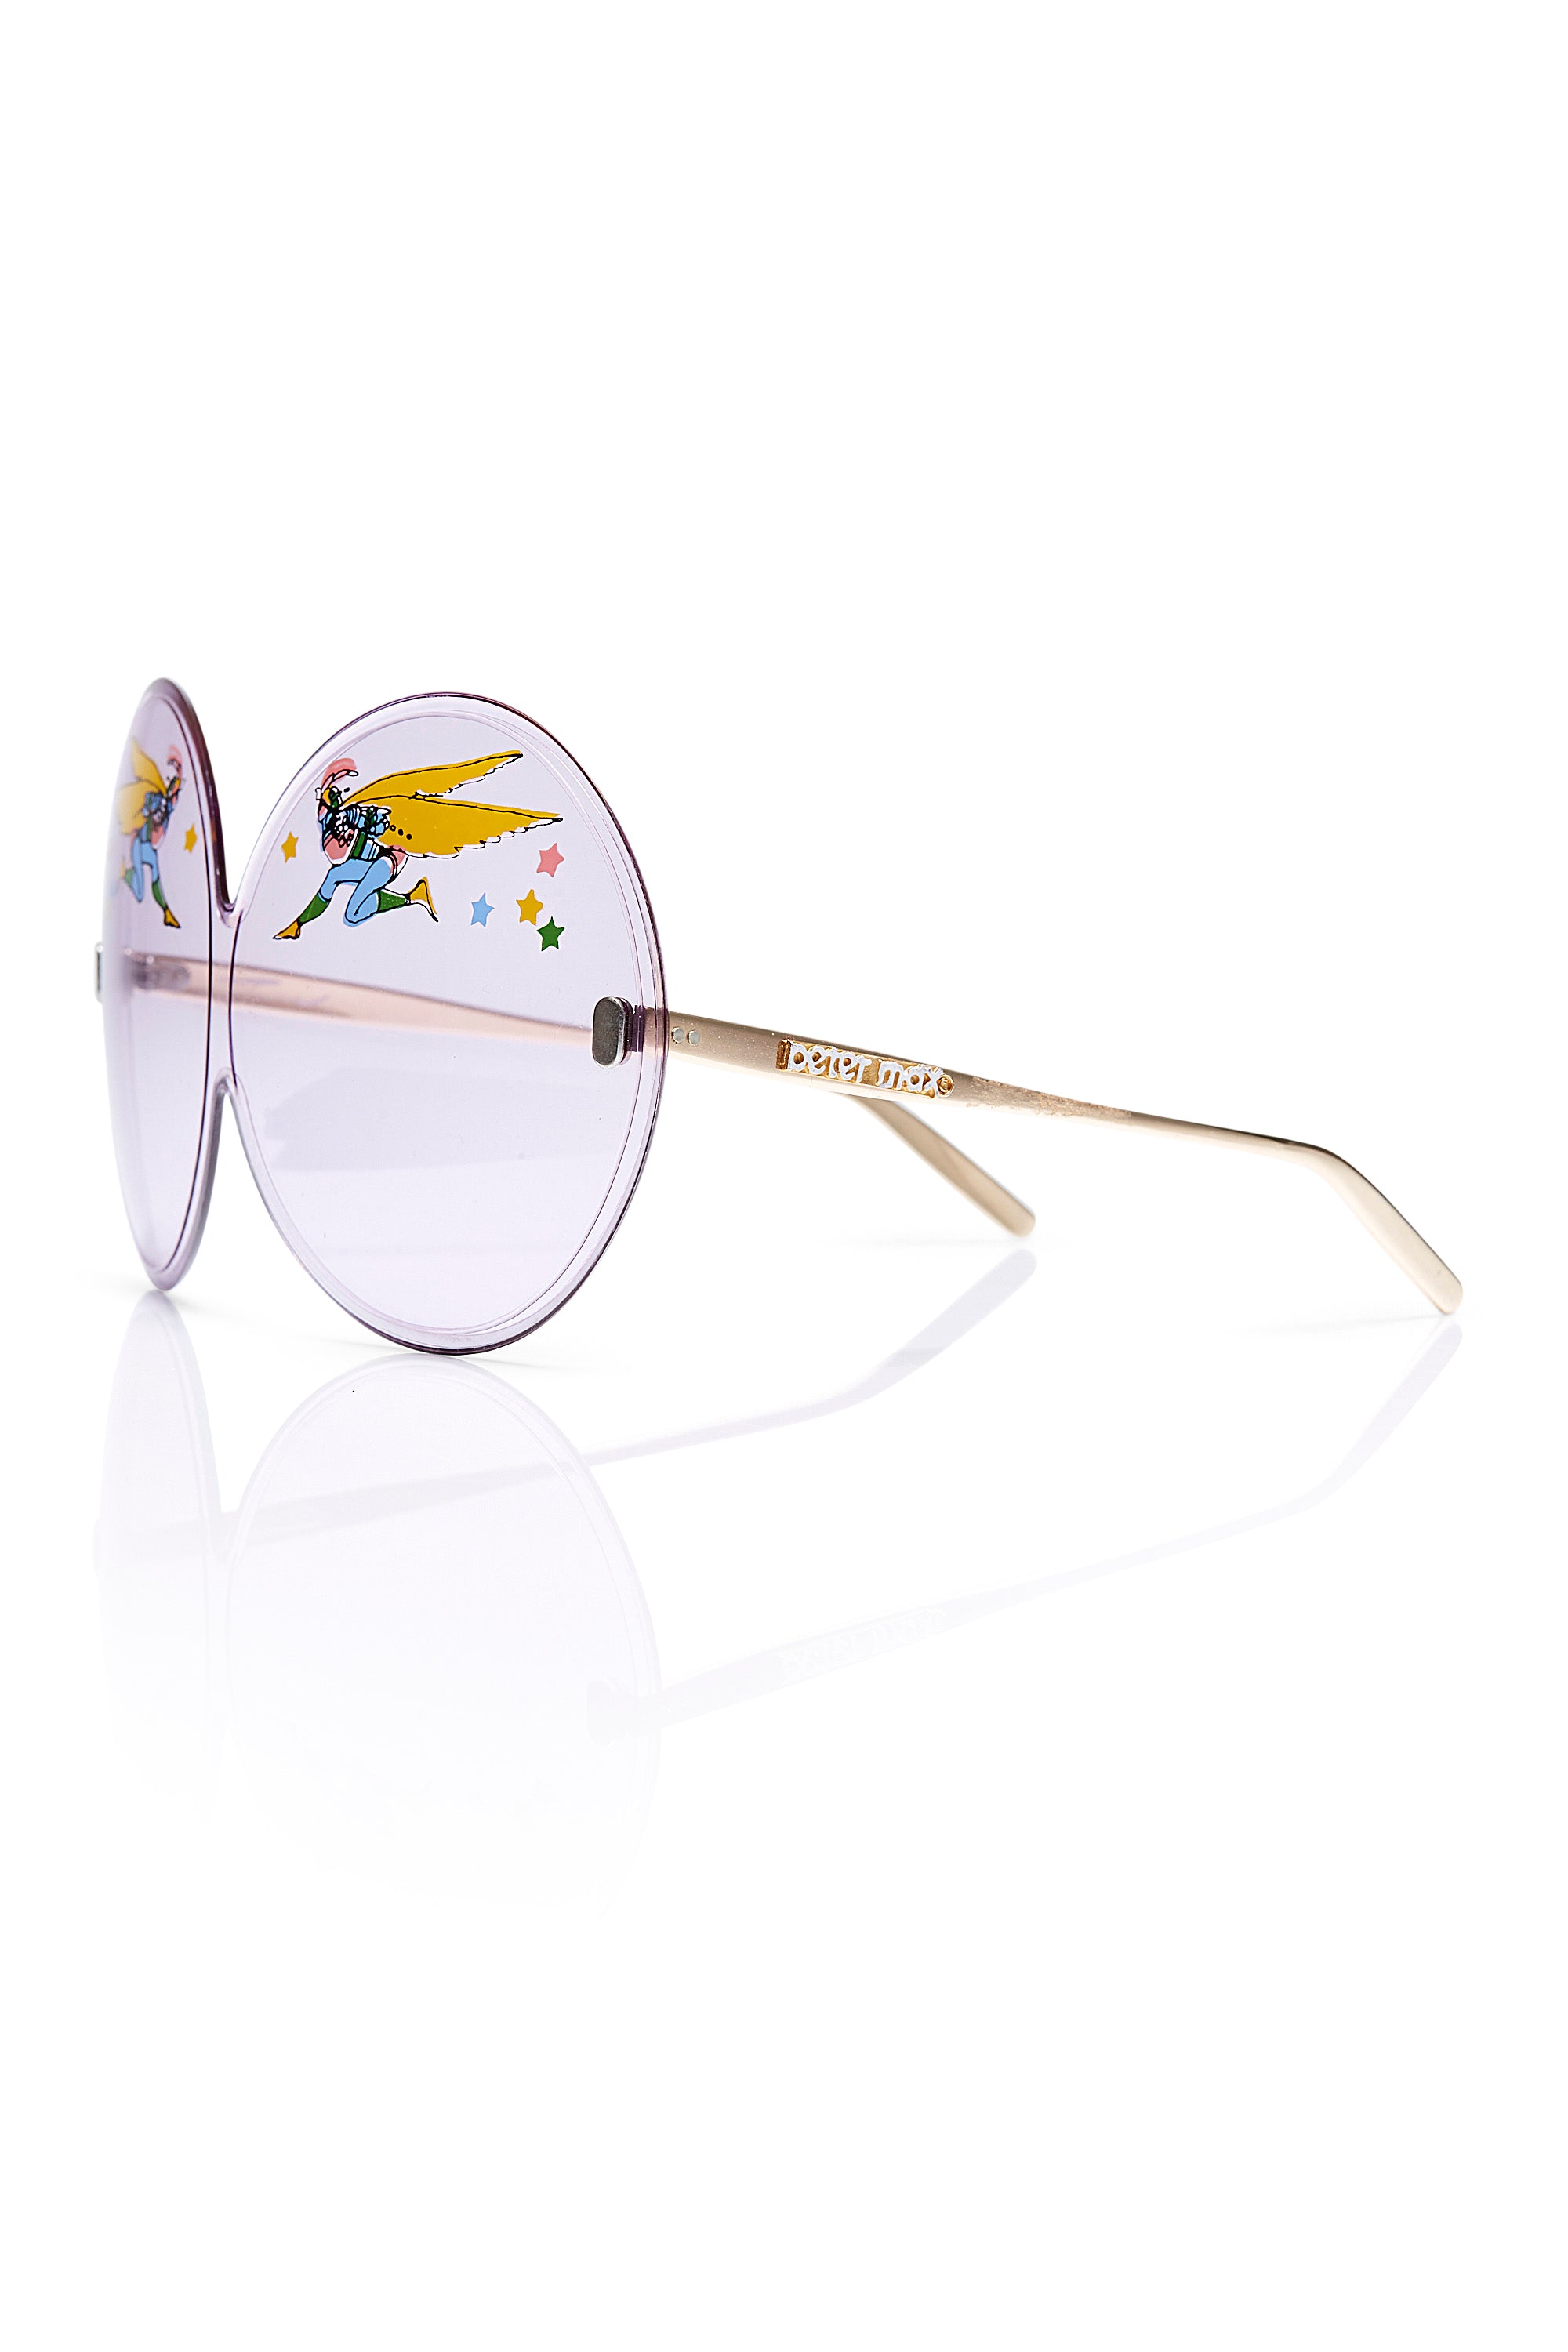 Peter Max<br> 1960's super rare wearable art graphic lense sunglasses